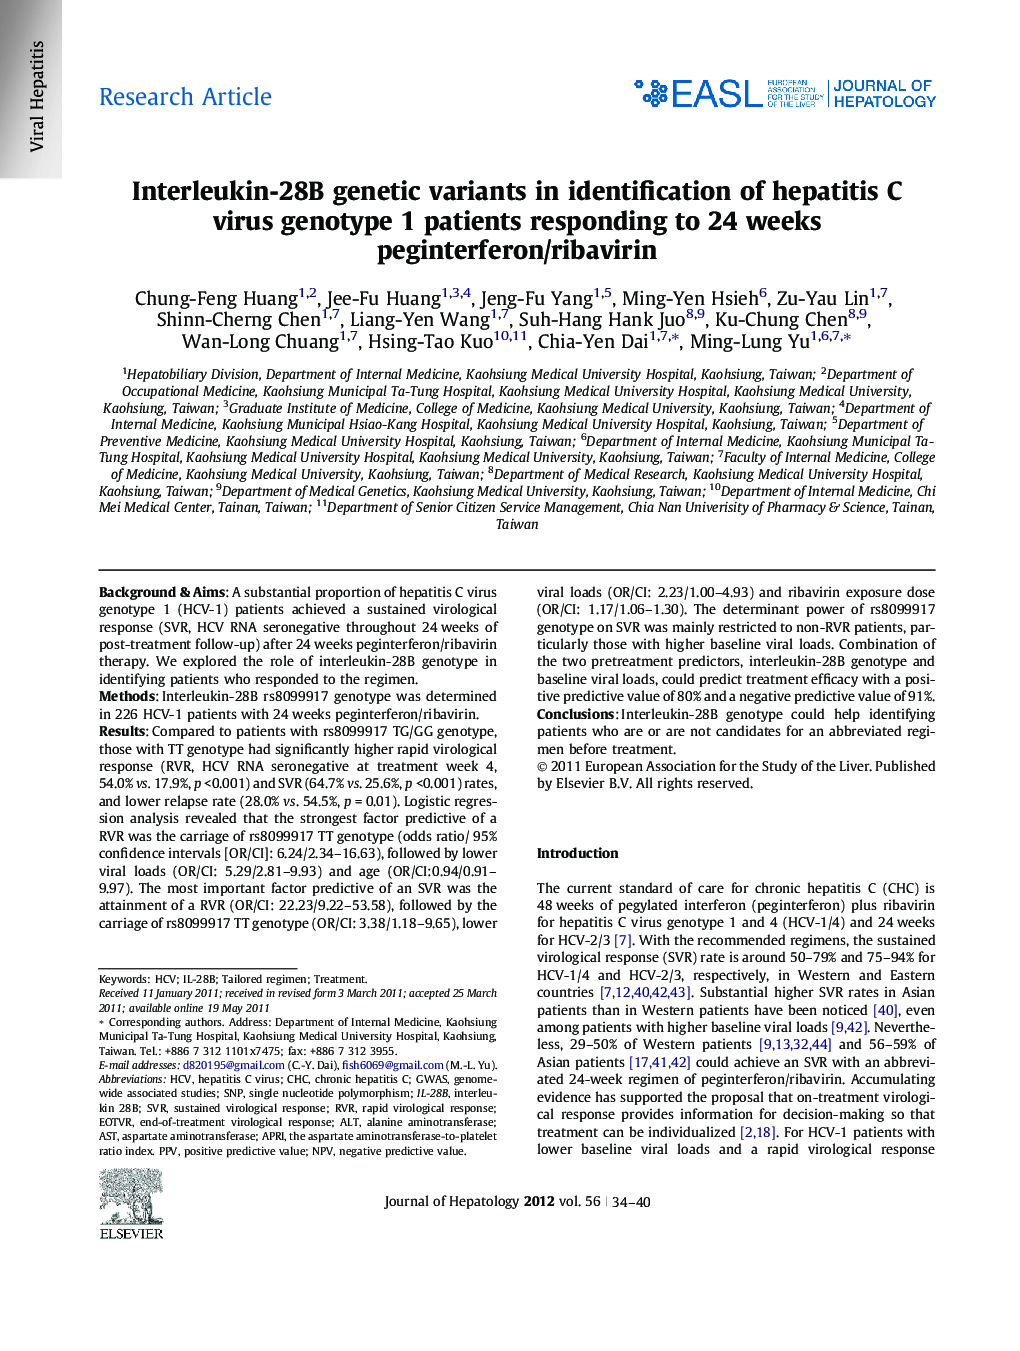 Research ArticleInterleukin-28B genetic variants in identification of hepatitis C virus genotype 1 patients responding to 24 weeks peginterferon/ribavirin